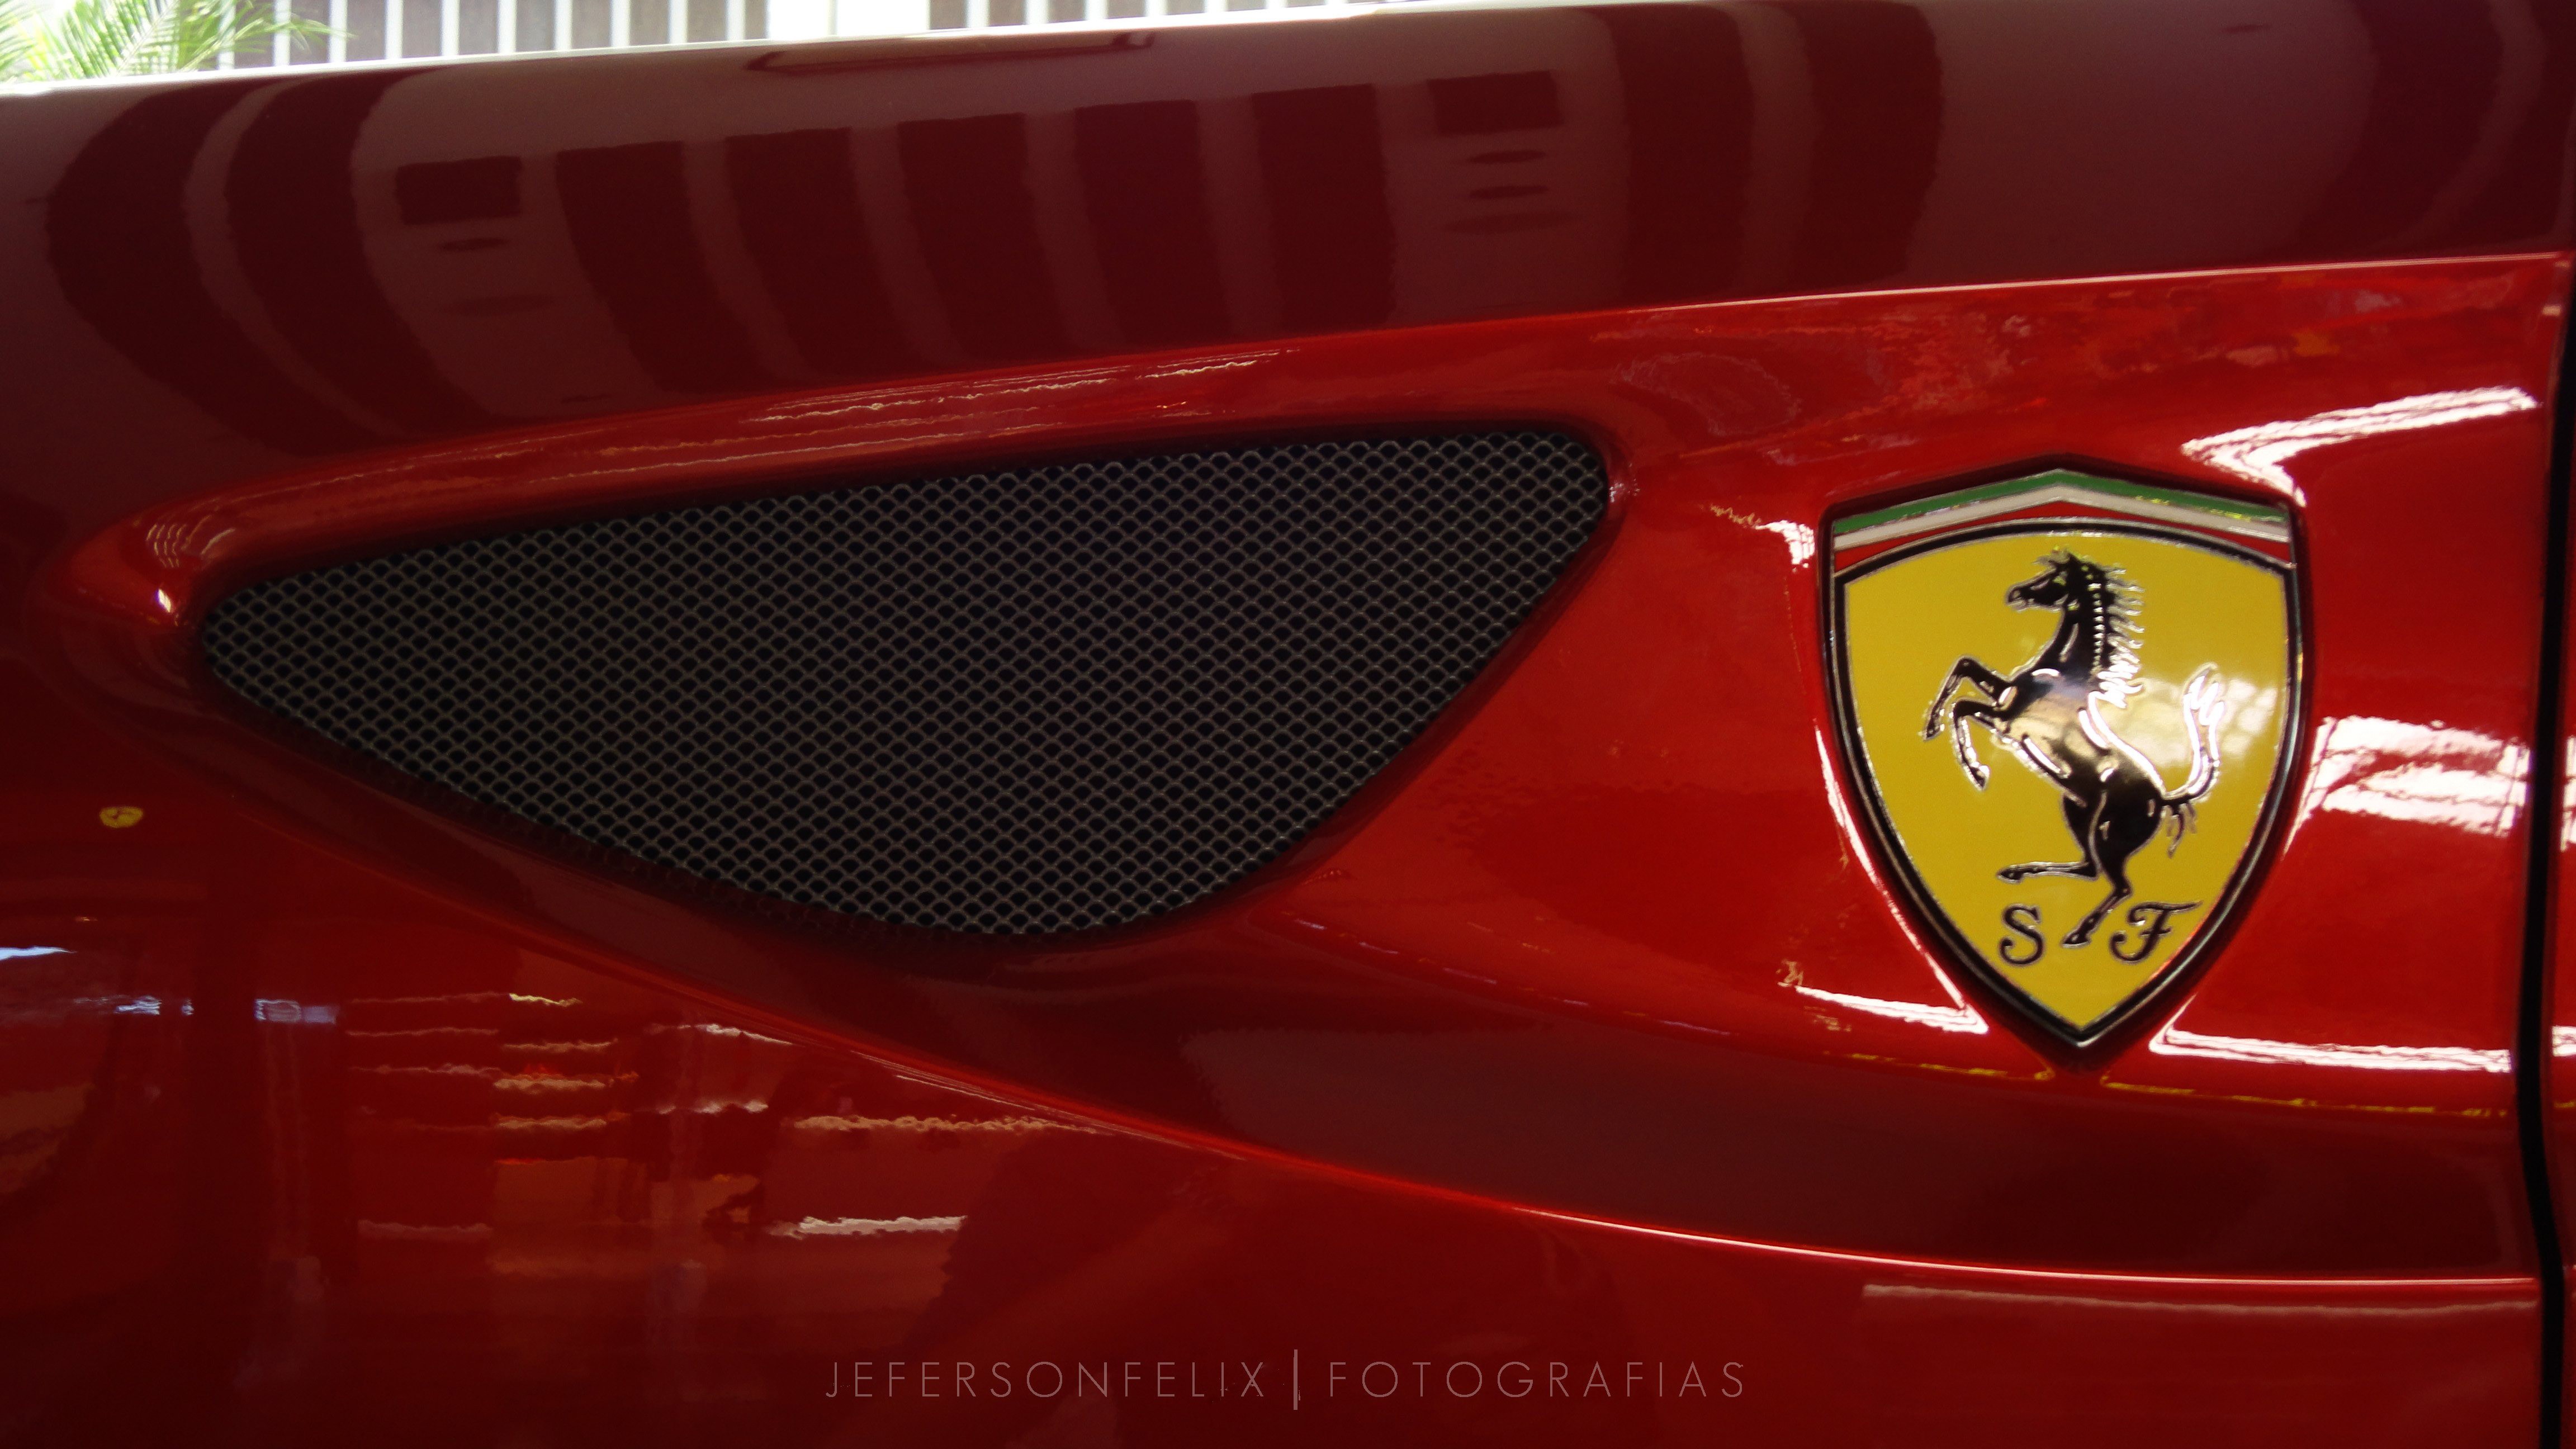 General 4608x2592 Ferrari car vehicle red cars italian cars Stellantis